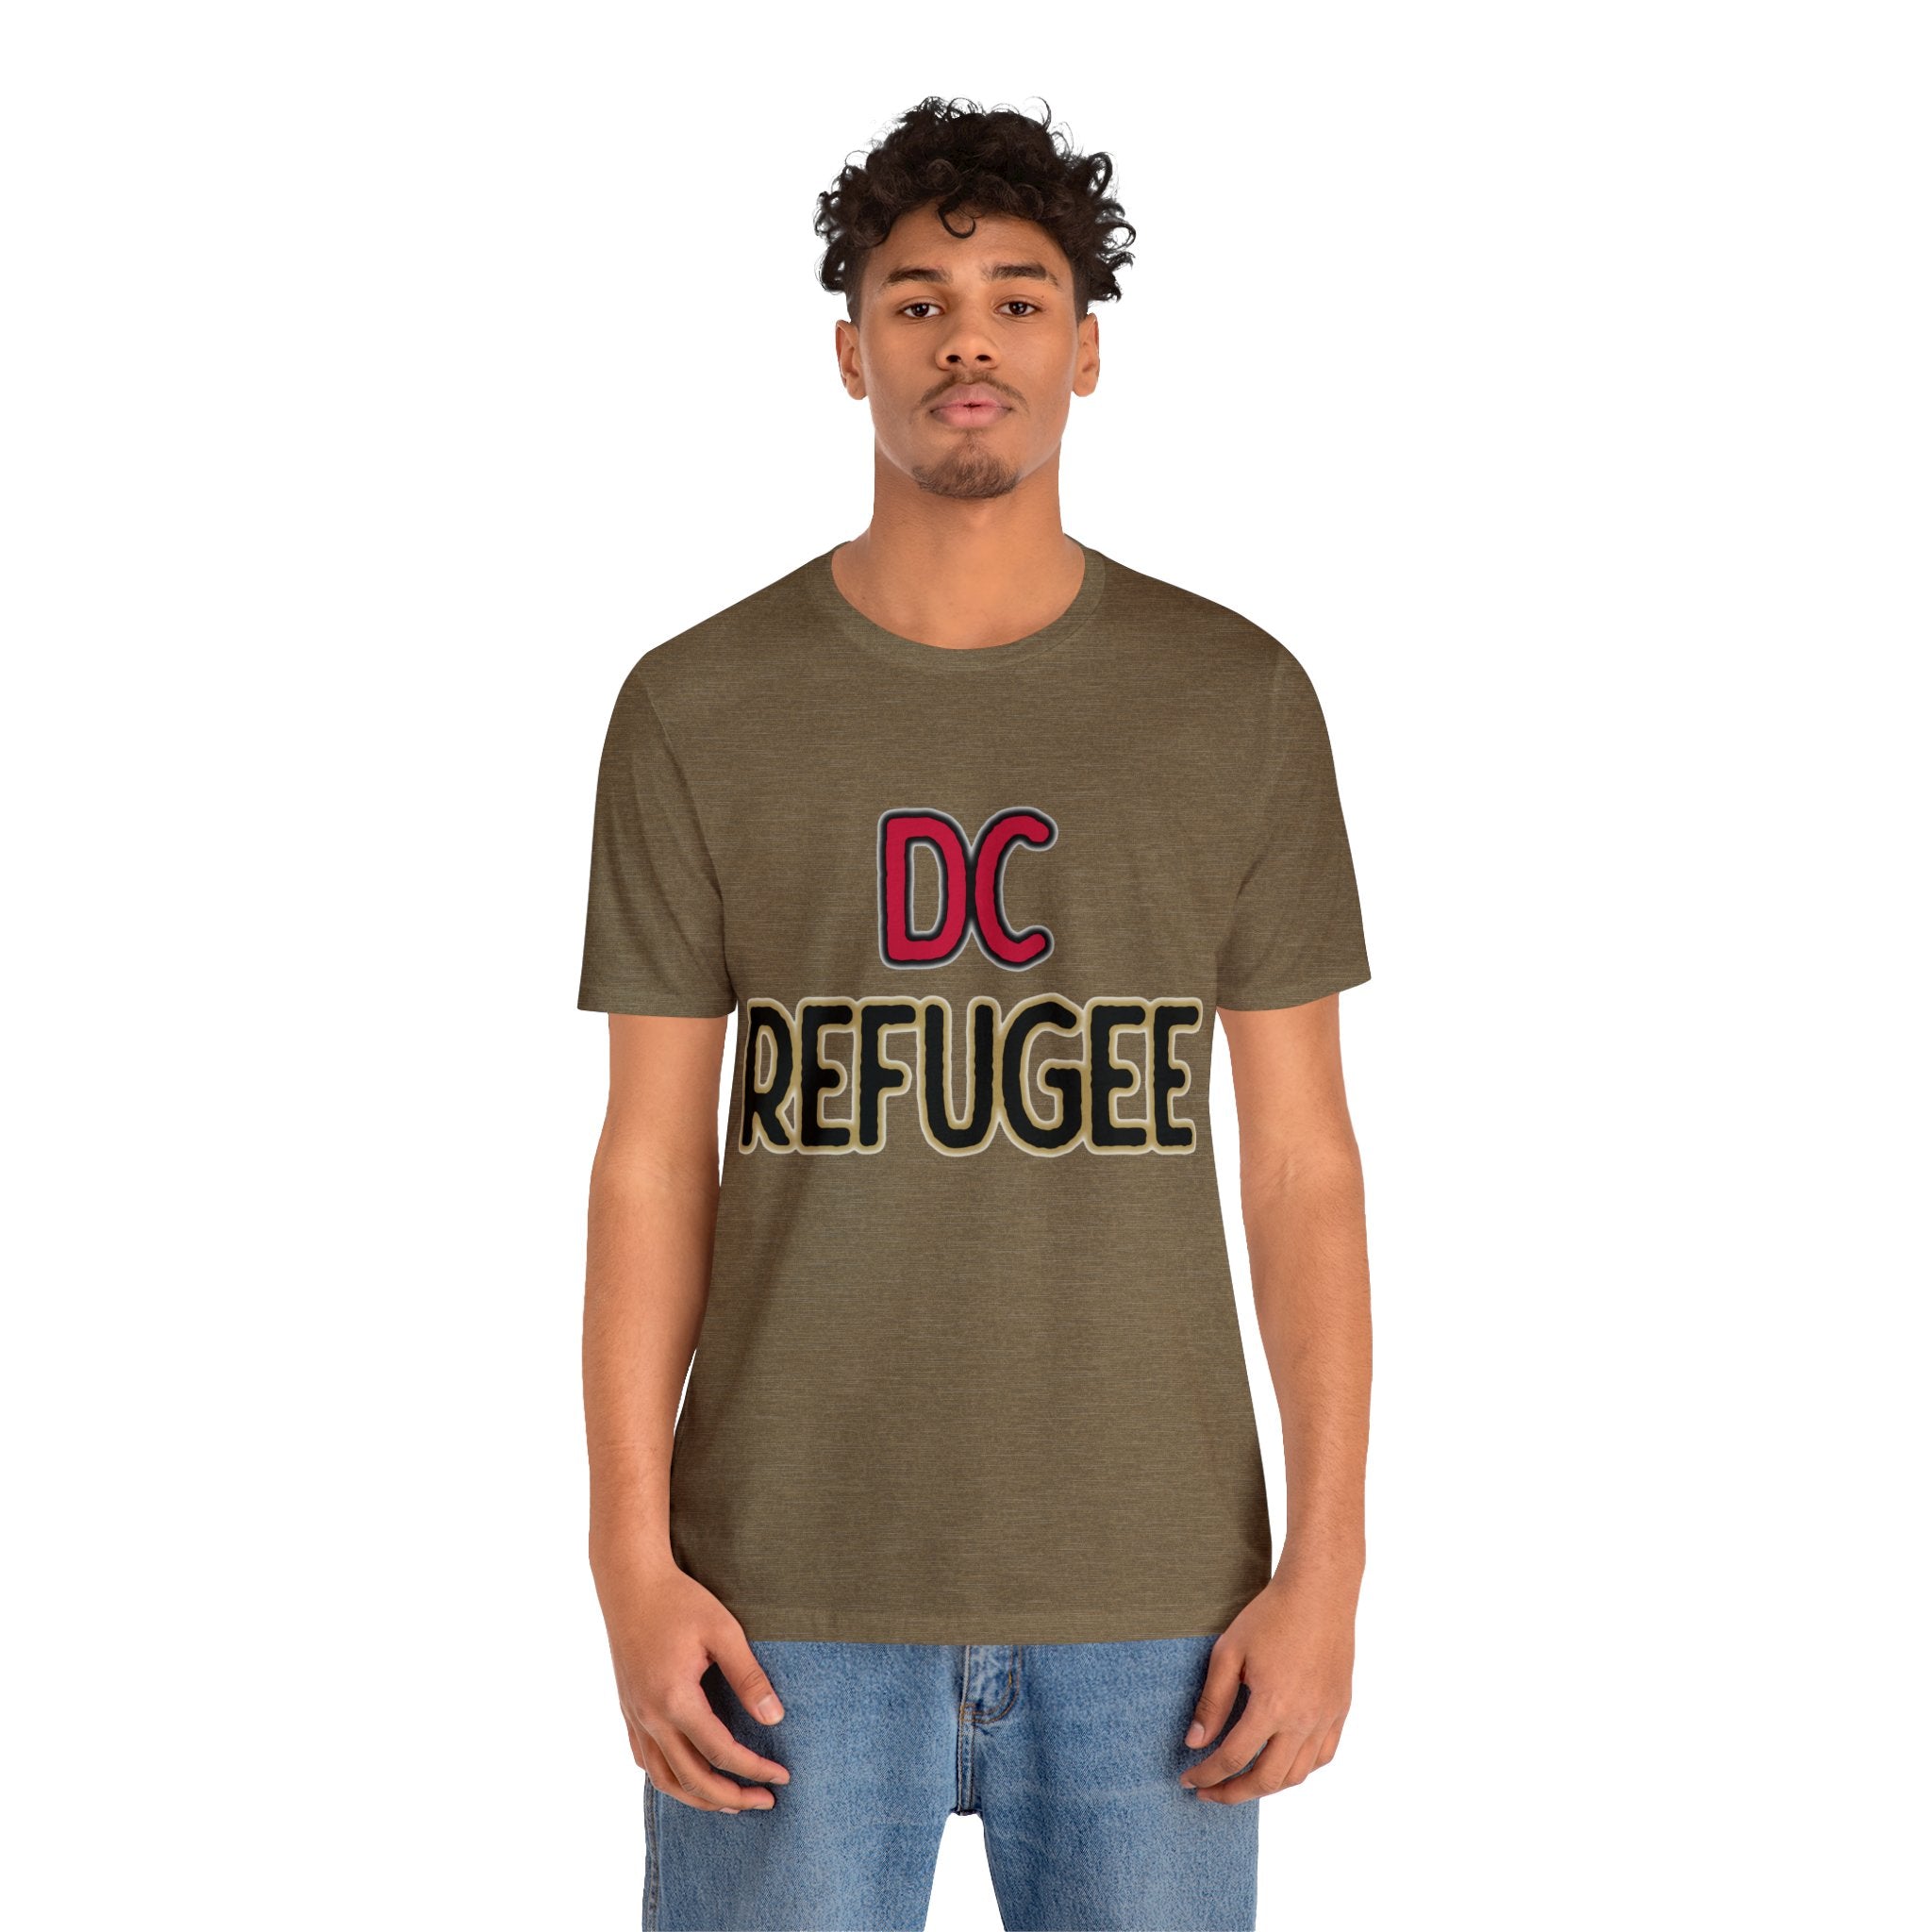 DC Refugee Tee